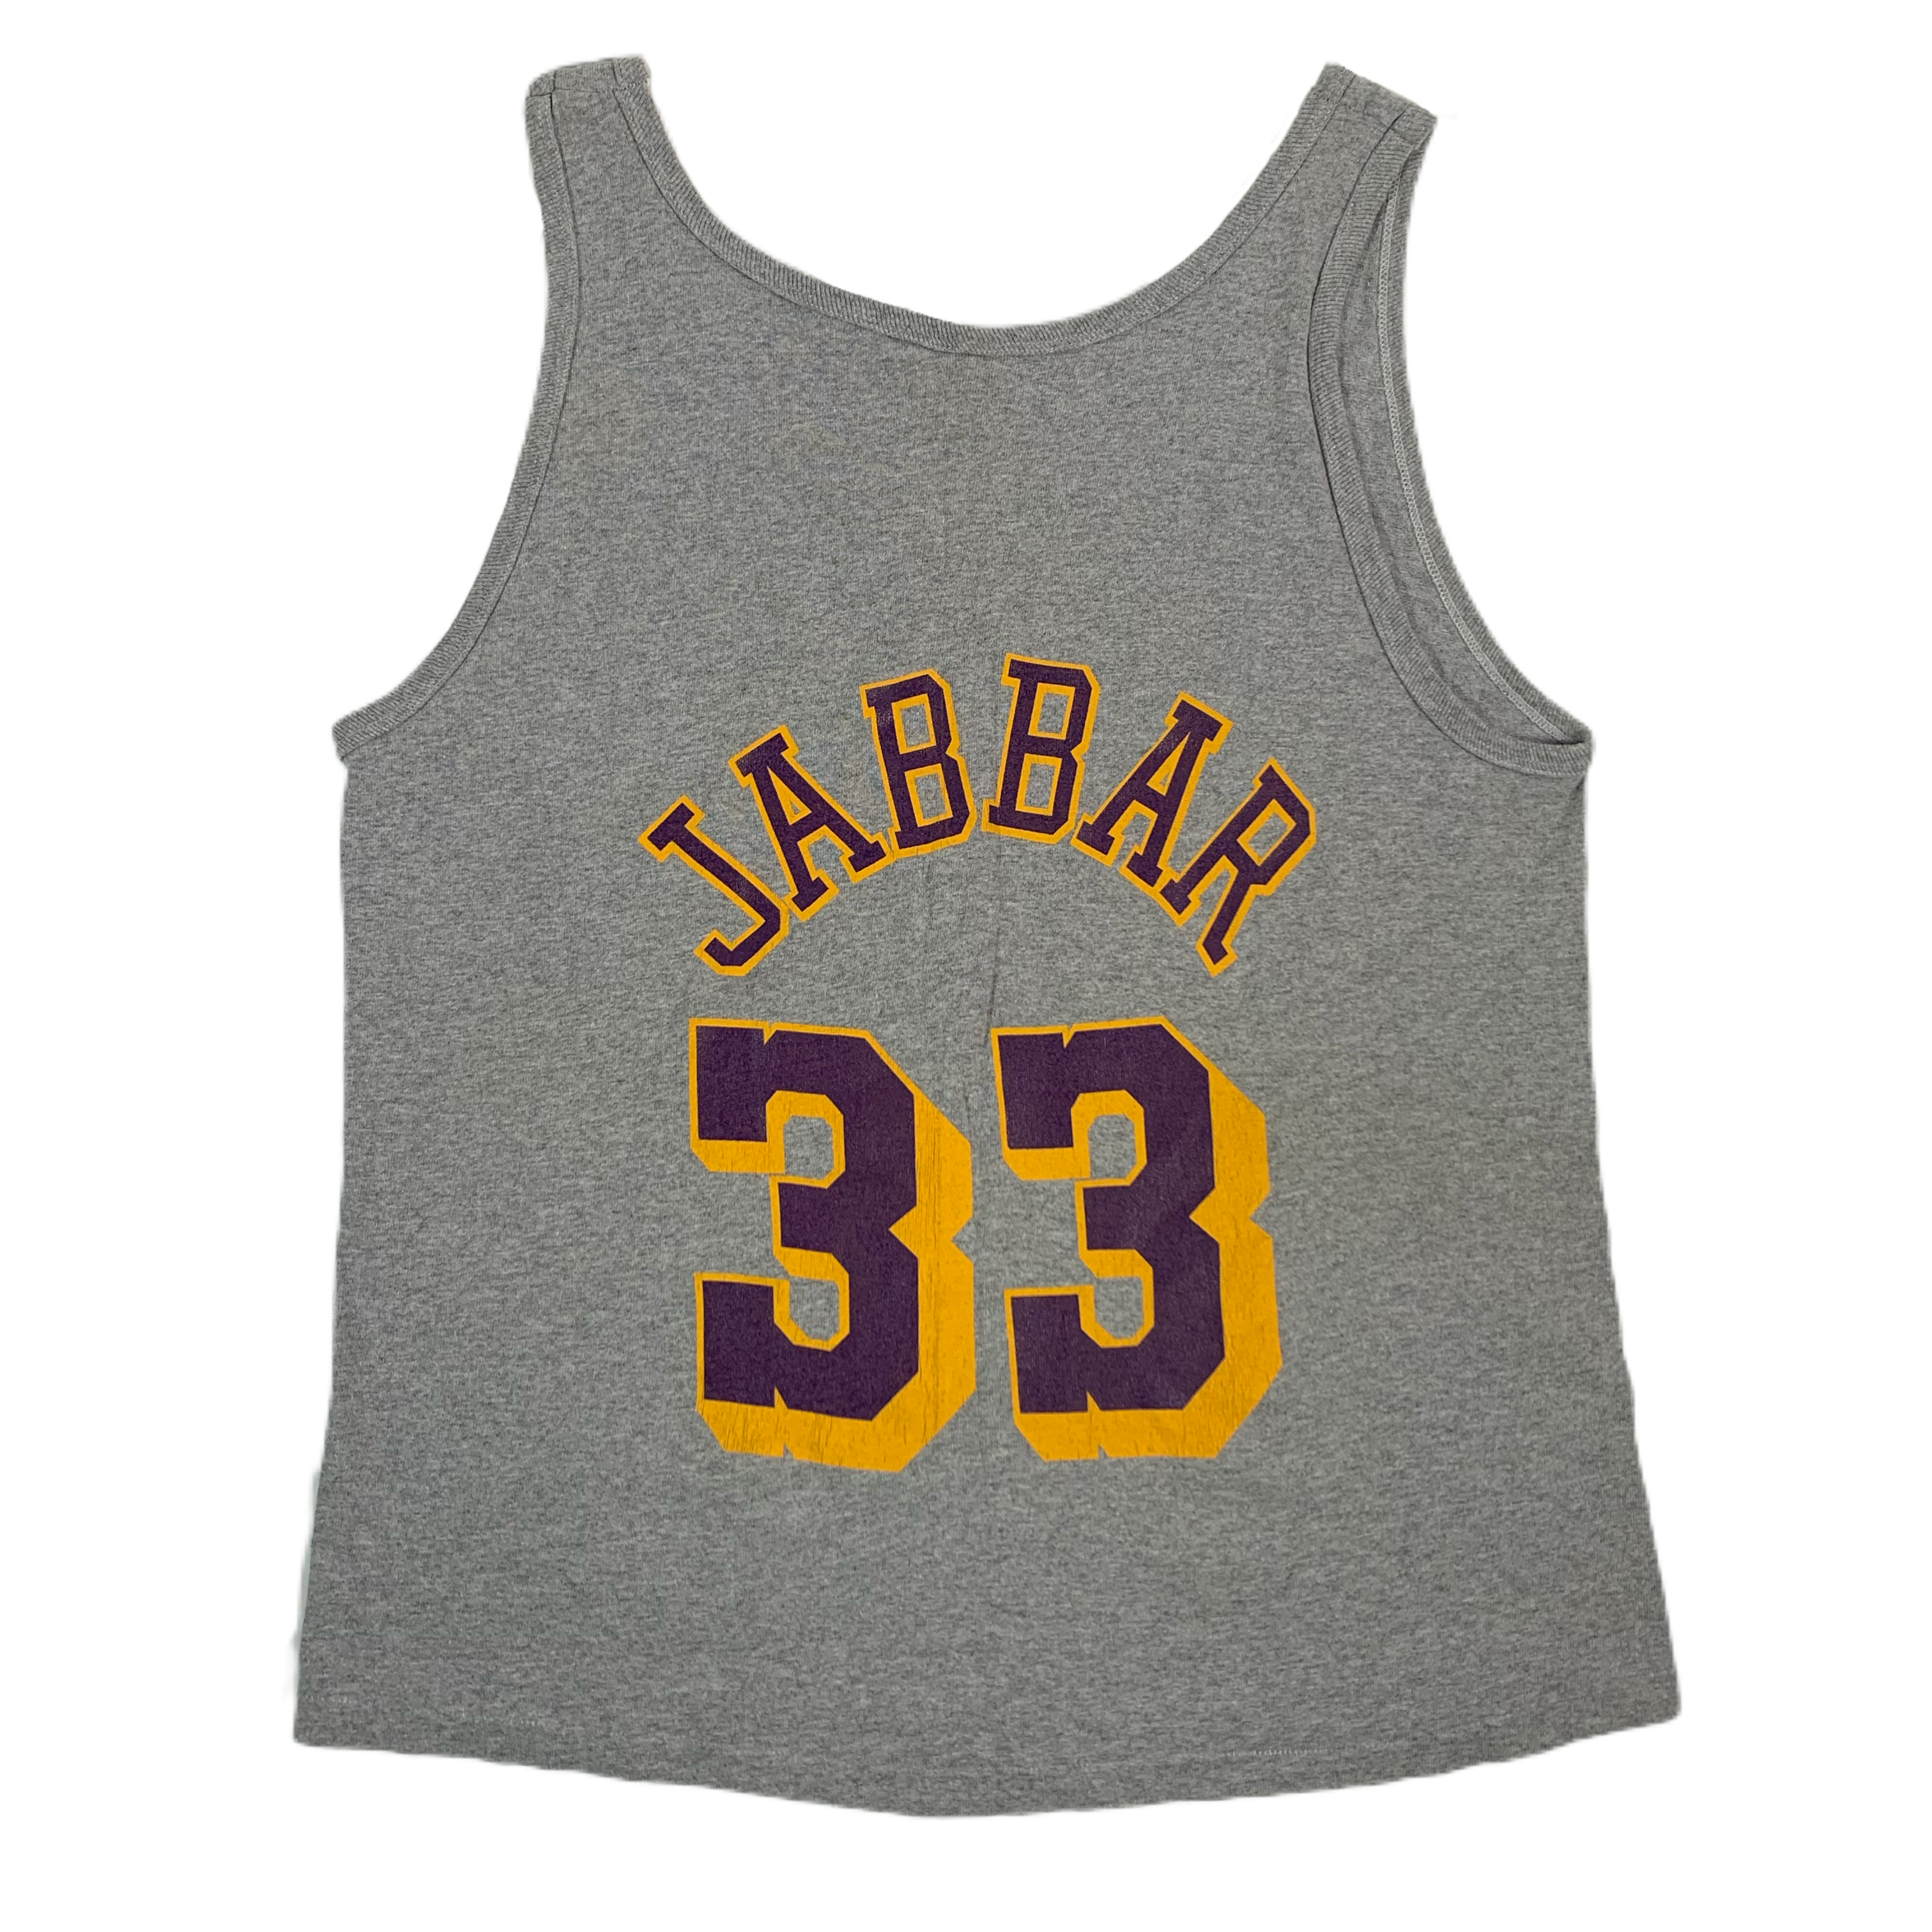 Kareem Abdul-Jabbar Jersey  Los Angeles Lakers Throwback